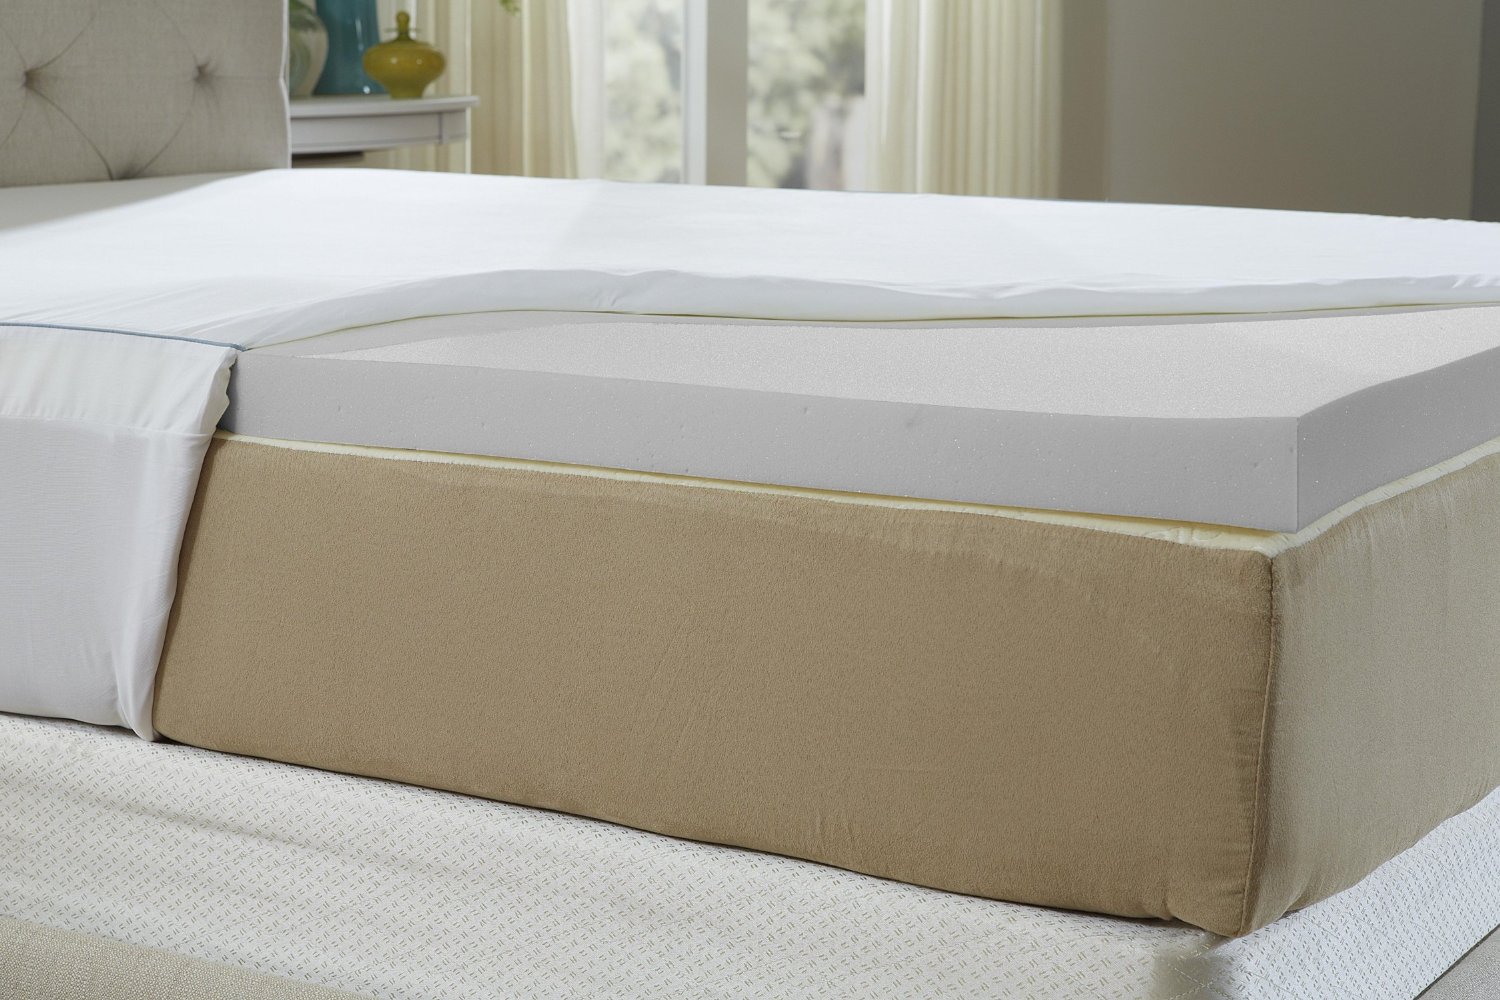 Do not stack multiple mattress toppers on top of a memory foam mattress